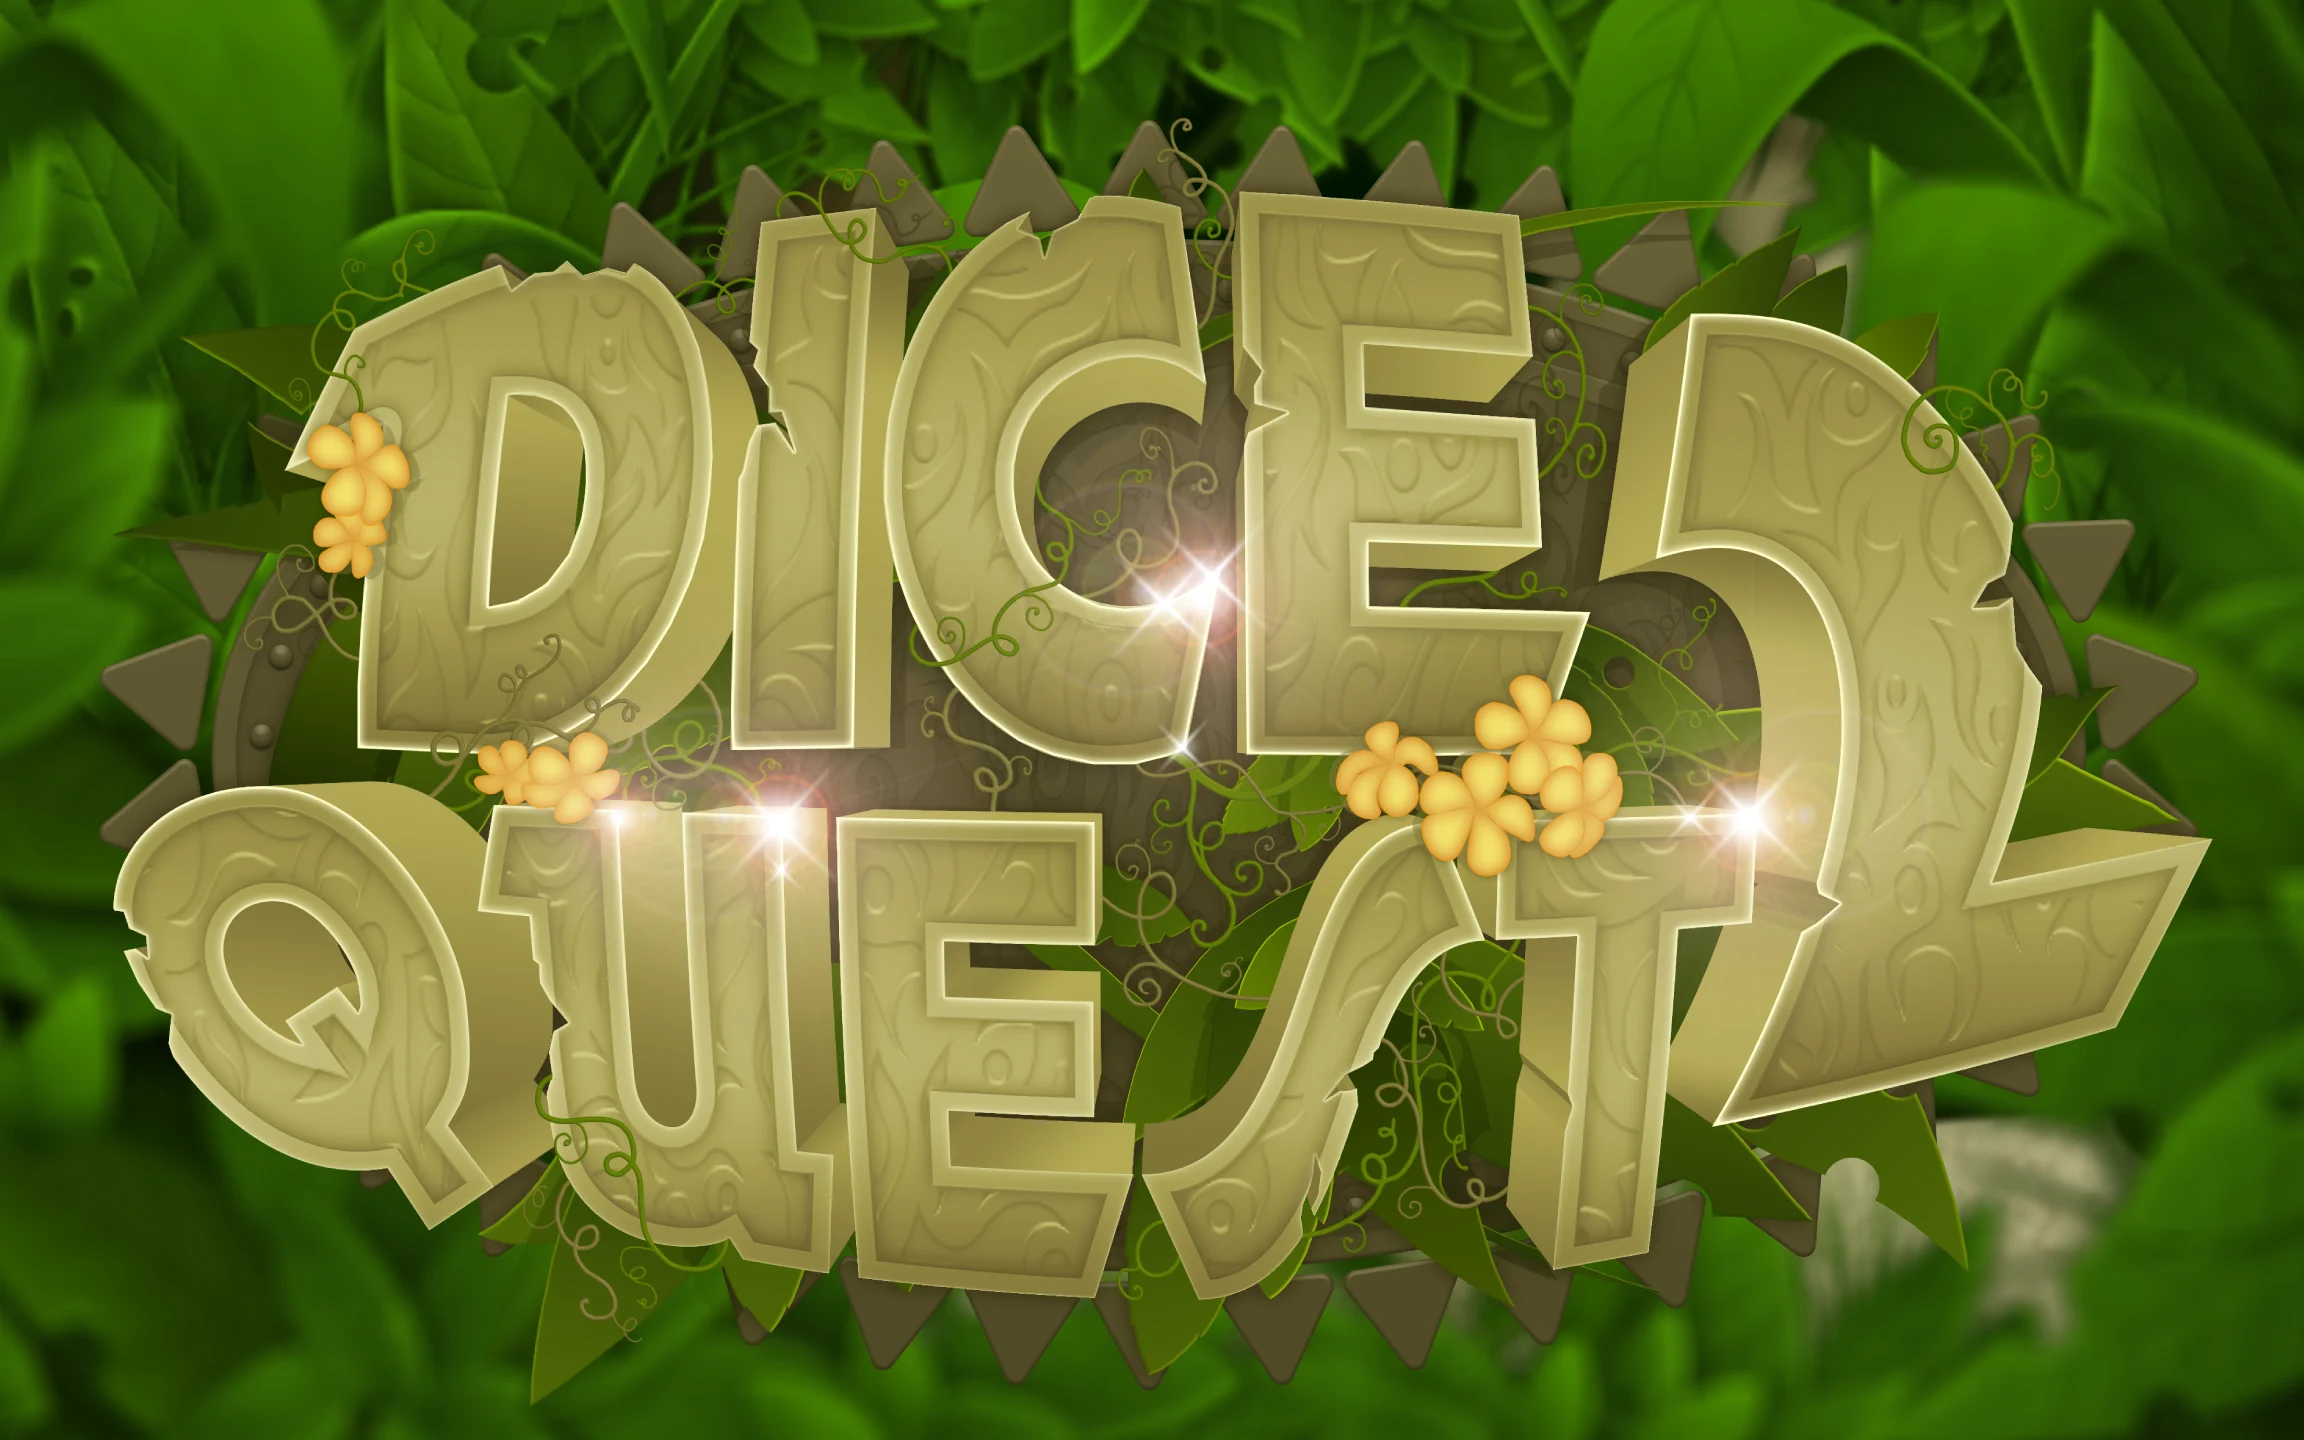 Spil Dice Quest 2 på Starcasino.be online kasino
